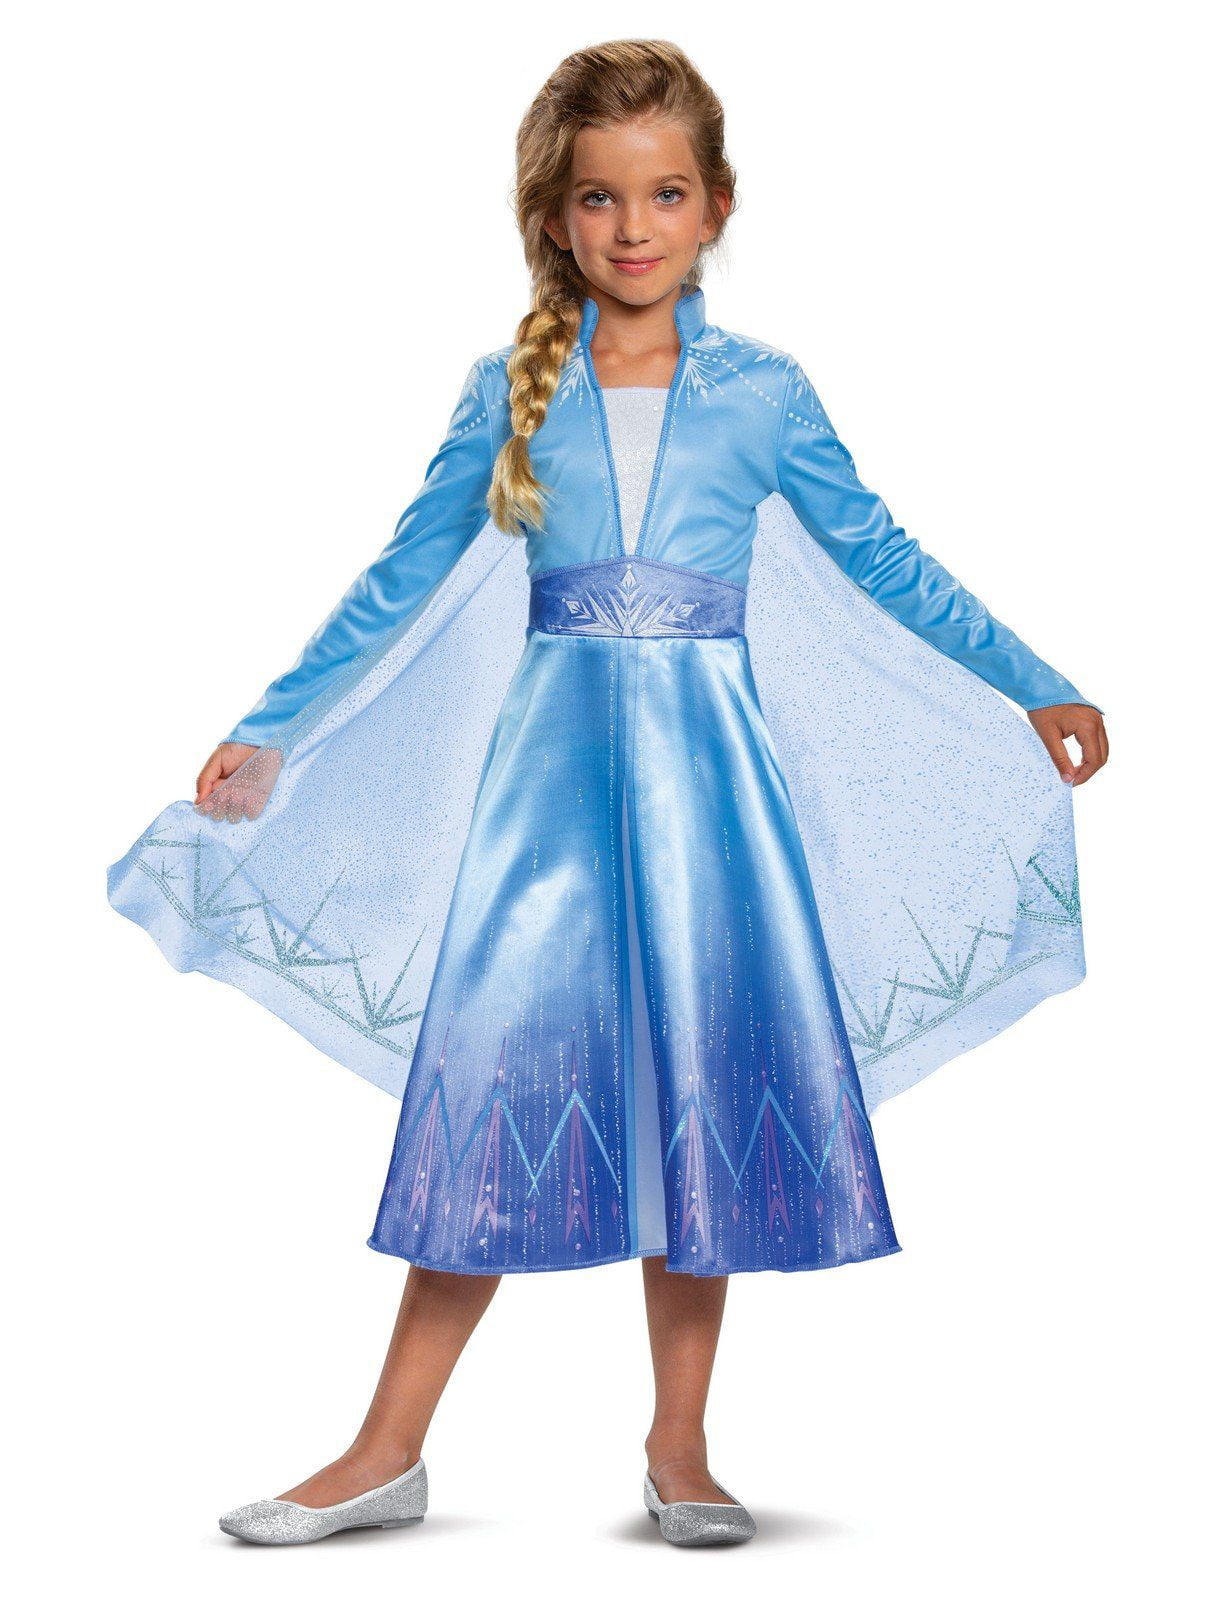 Anna Shoes Disney Frozen Princess Fancy Dress Halloween Child Costume Accessory 